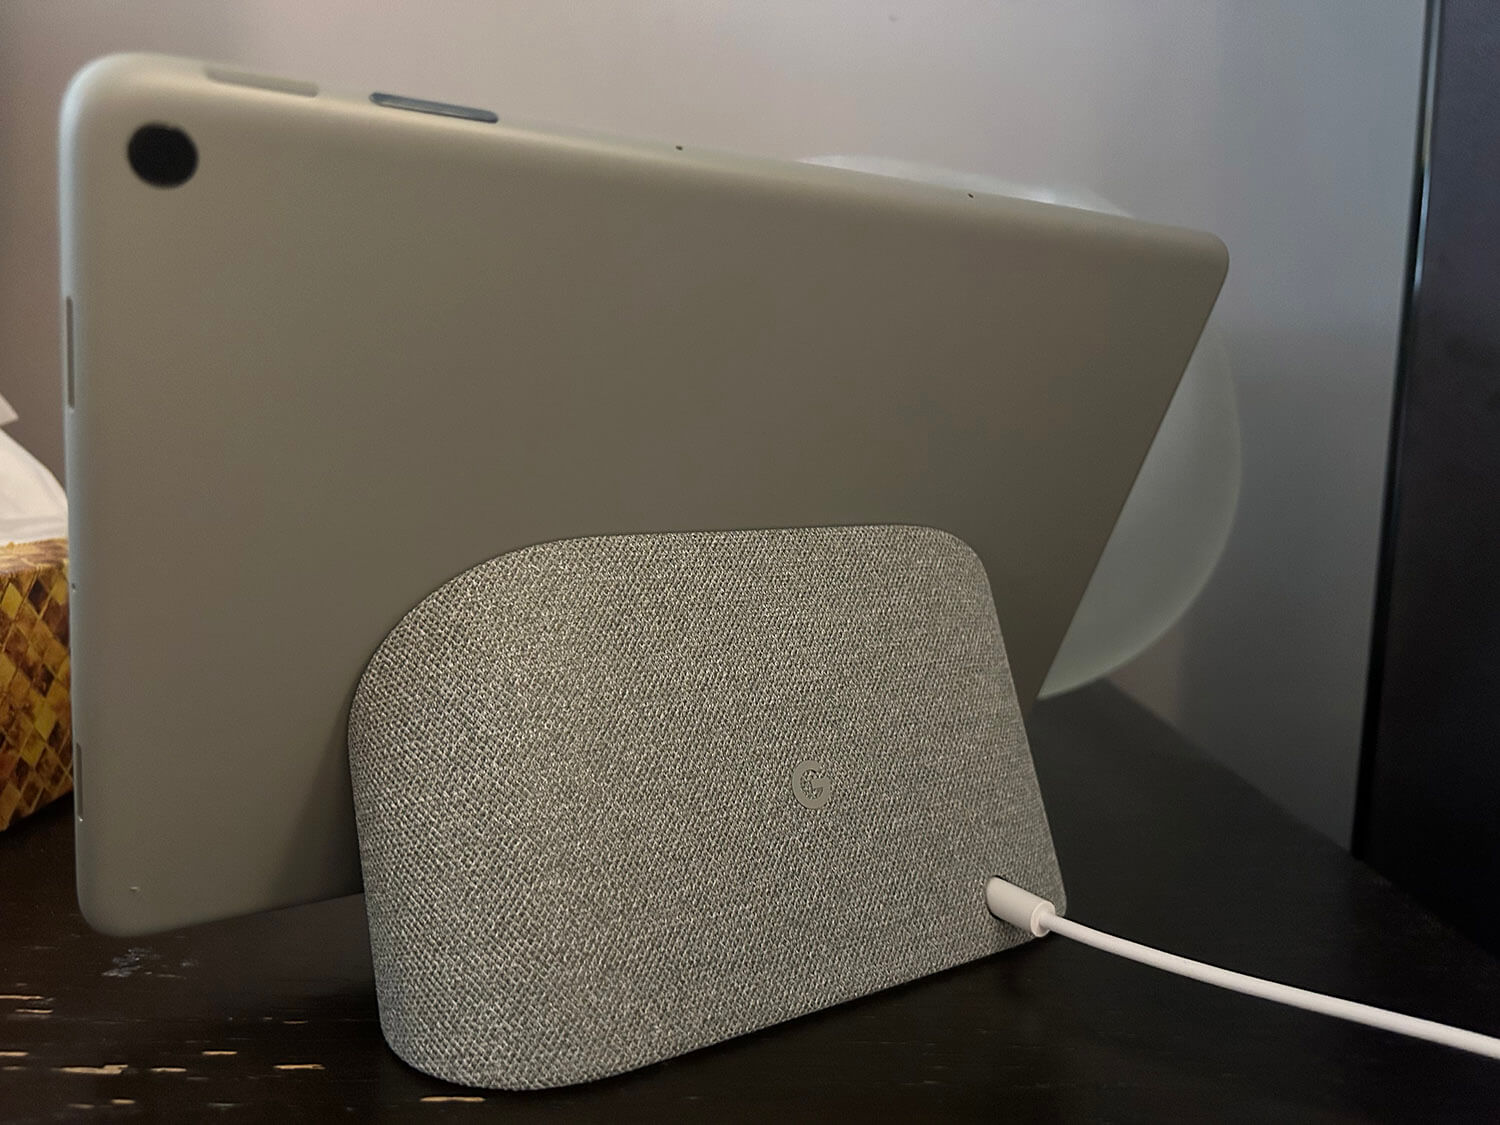 Google Pixel Tablet speaker dock